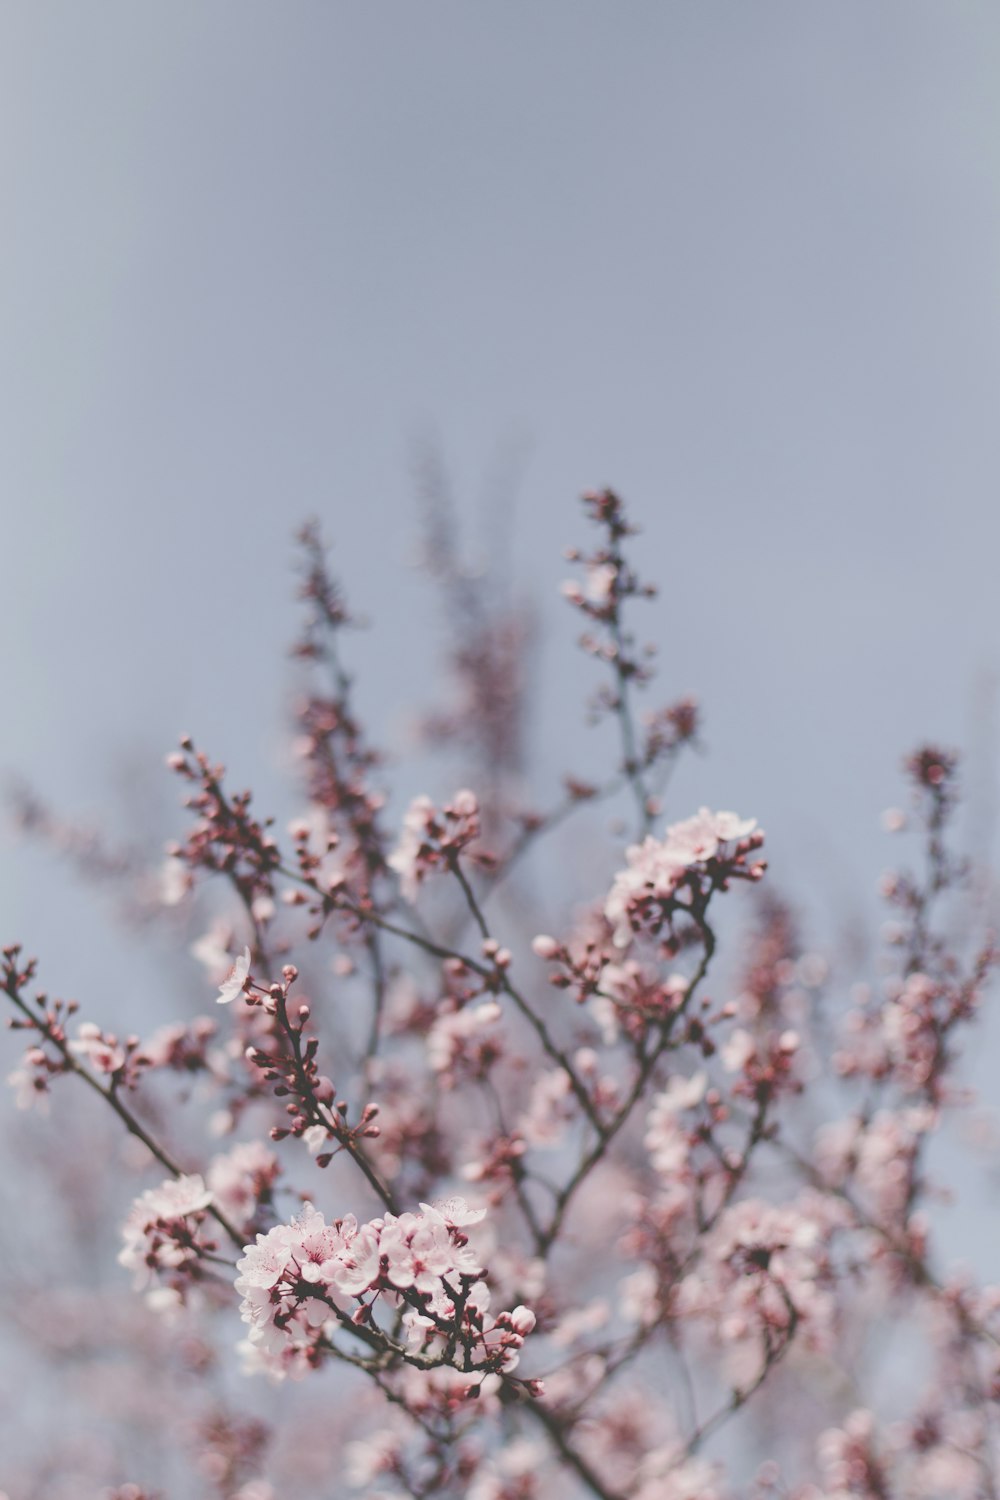 pink flower buds in tilt shift lens